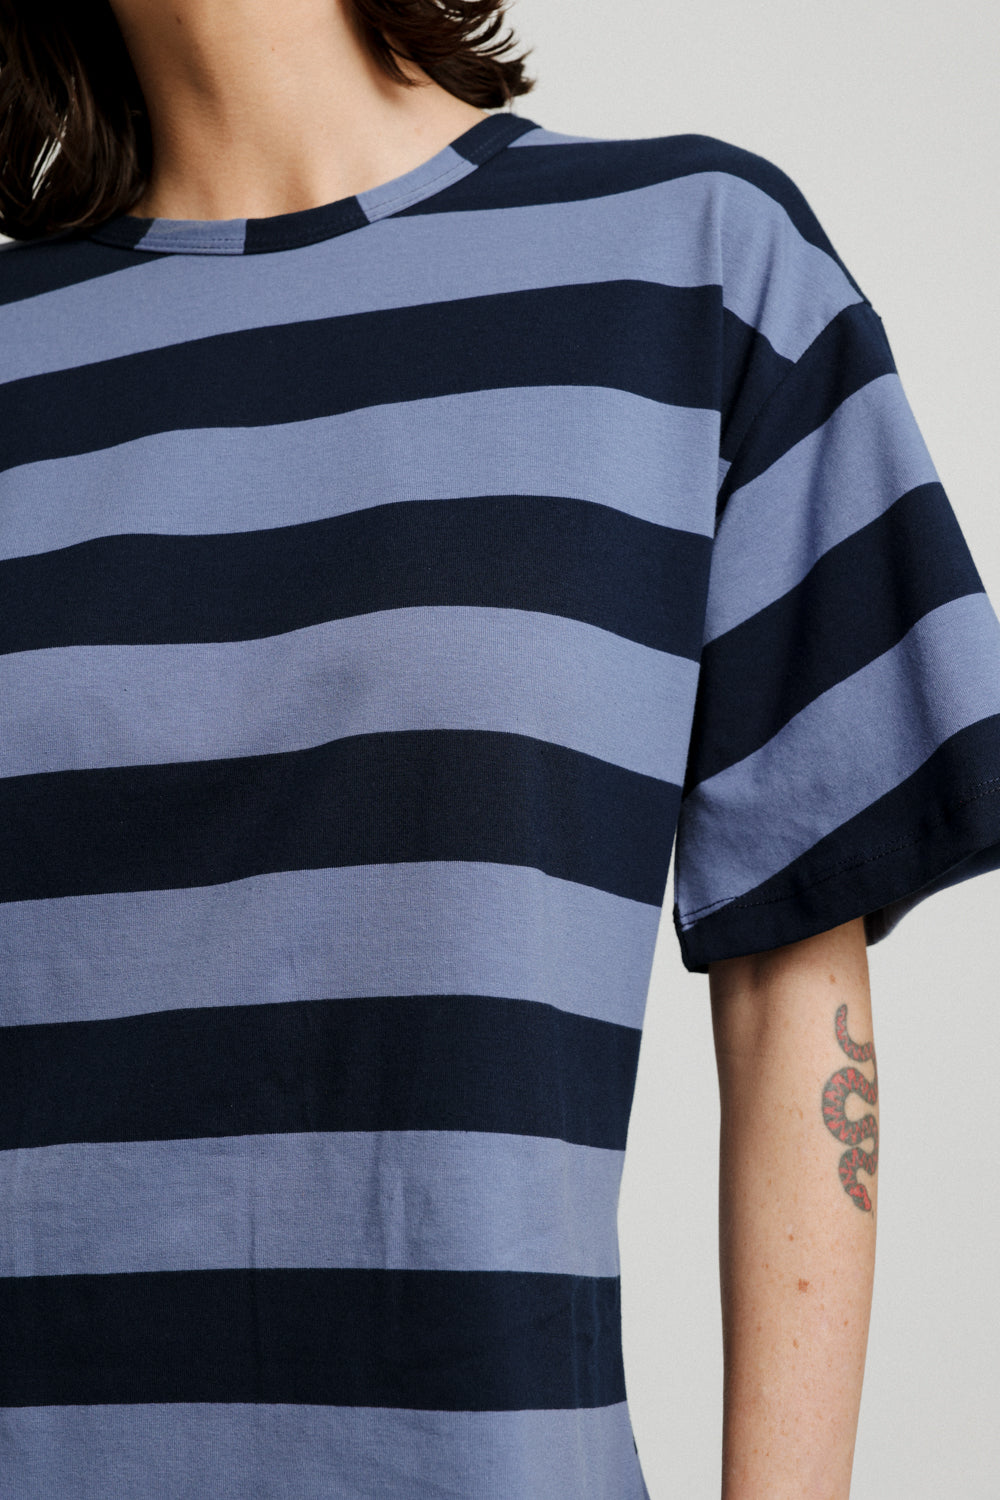 Rock Navy Stripes T-Shirt